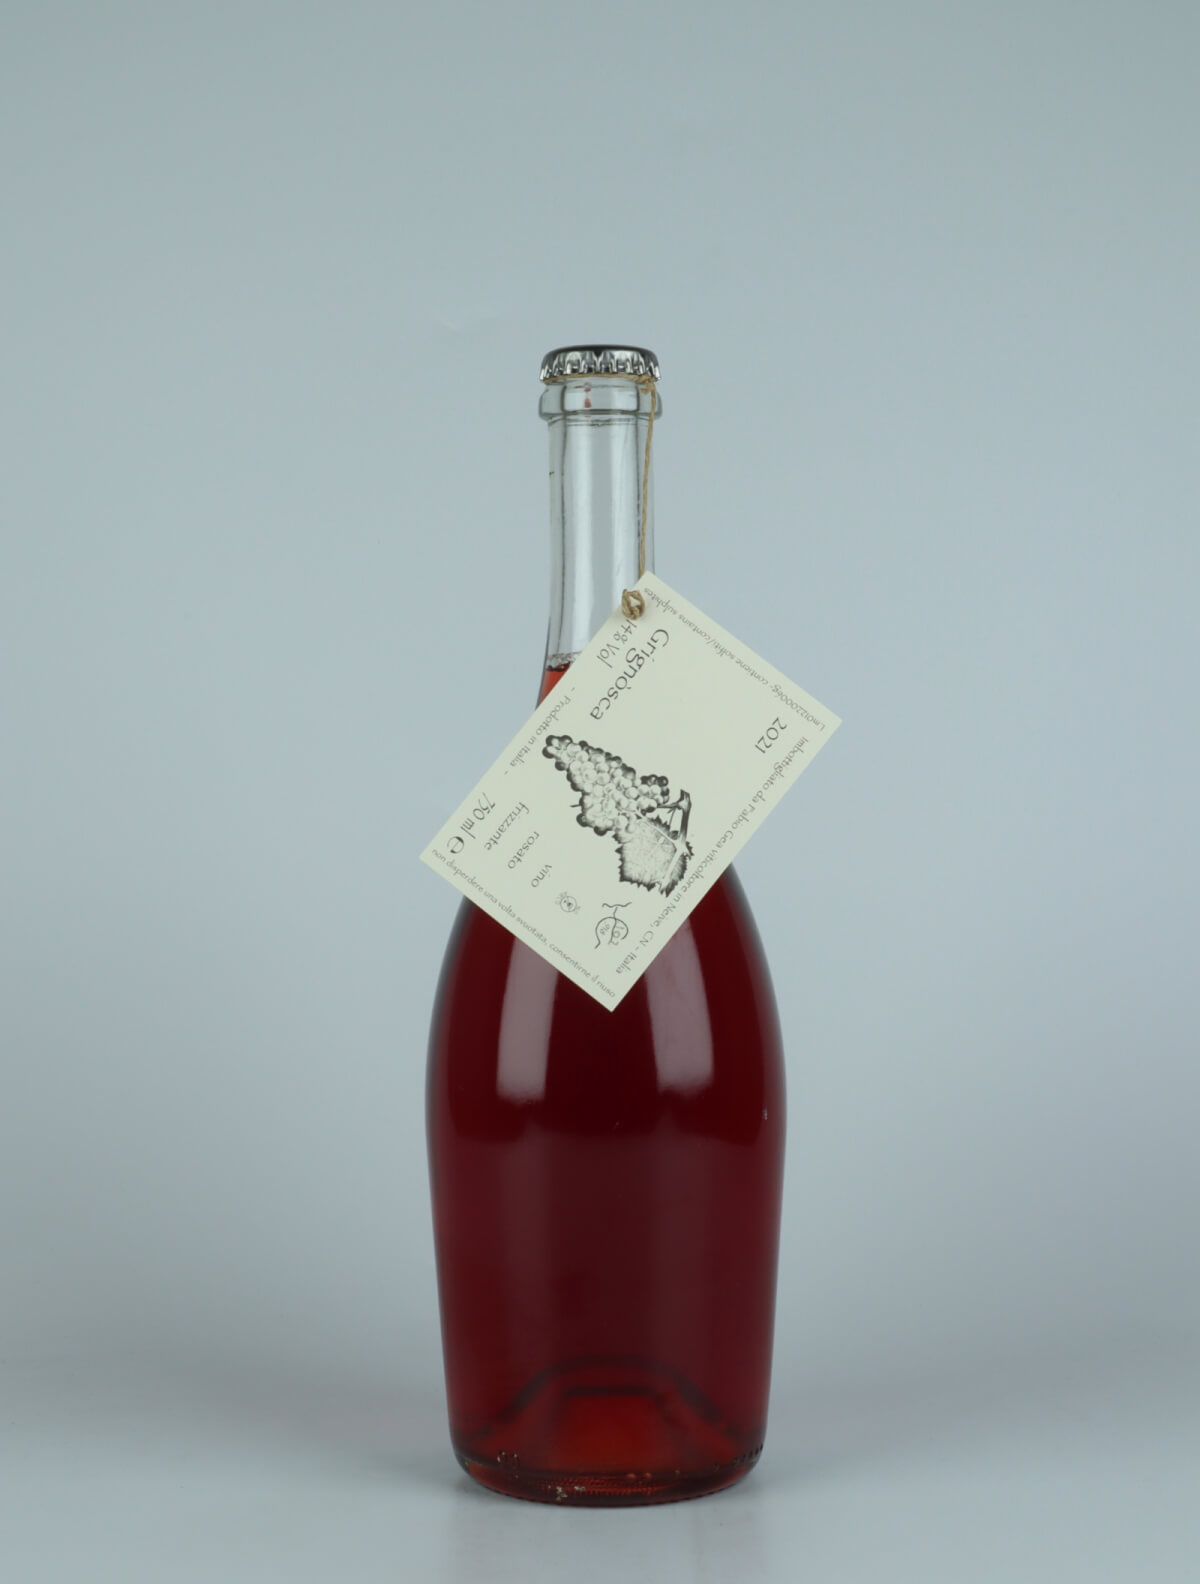 En flaske 2021 Grignosca Mousserende fra Fabio Gea, Piemonte i Italien